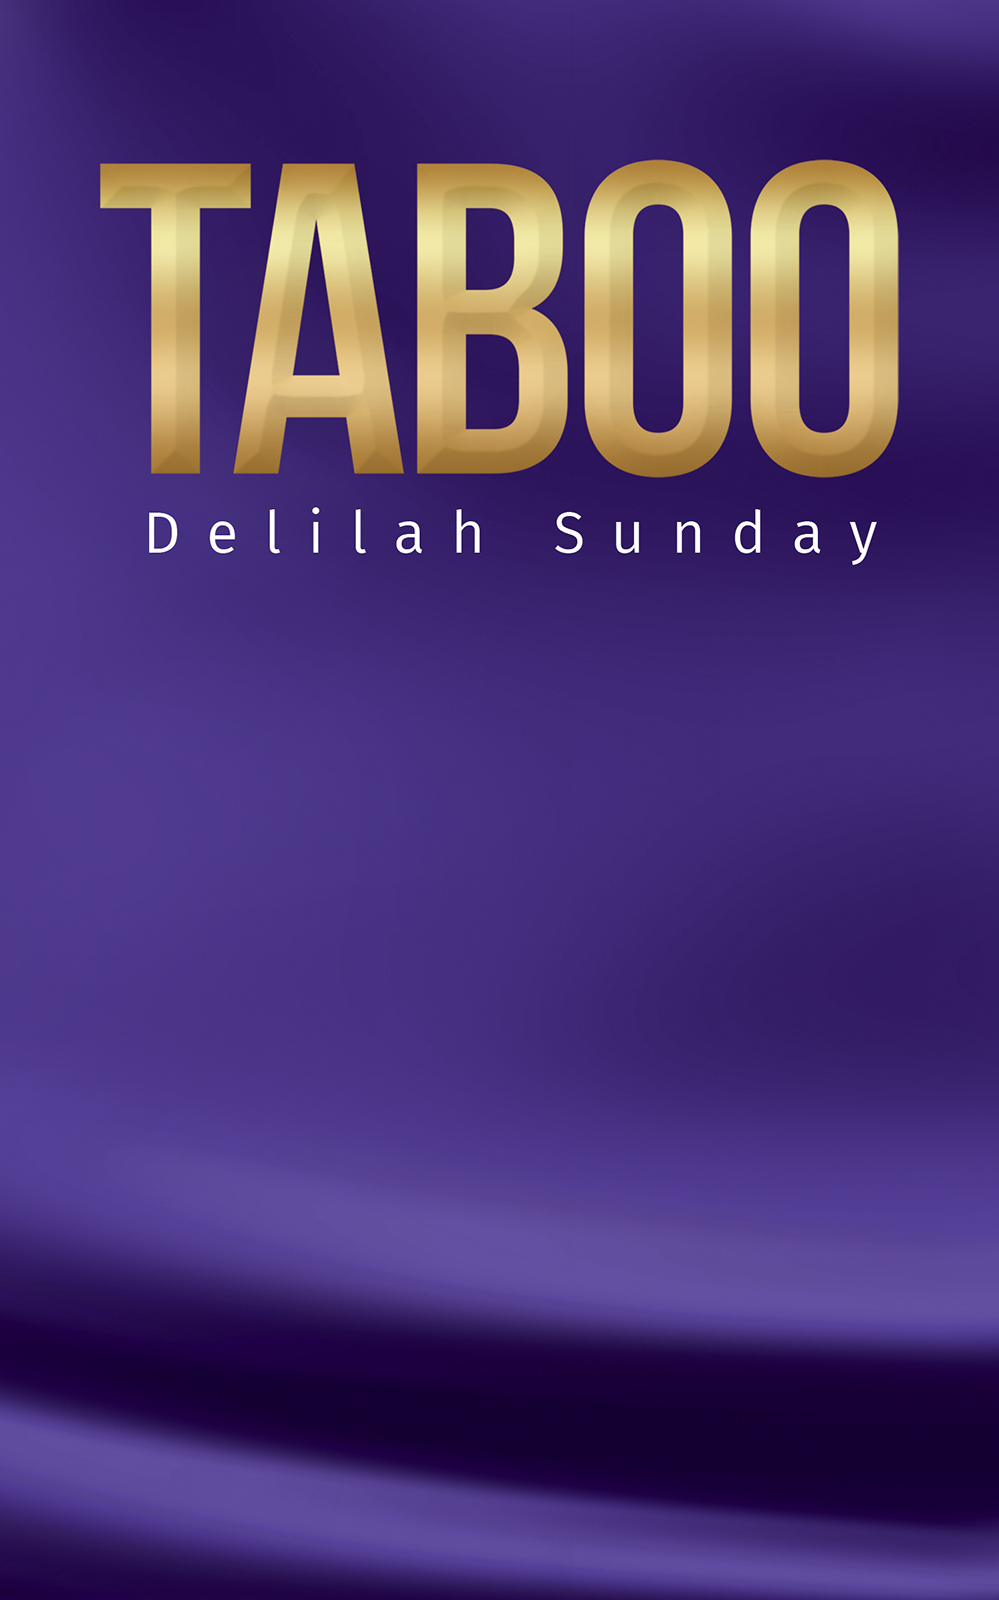 Taboo Delilah Sunday Austin Macauley Publishers 2019-08-30 About the Author - photo 1